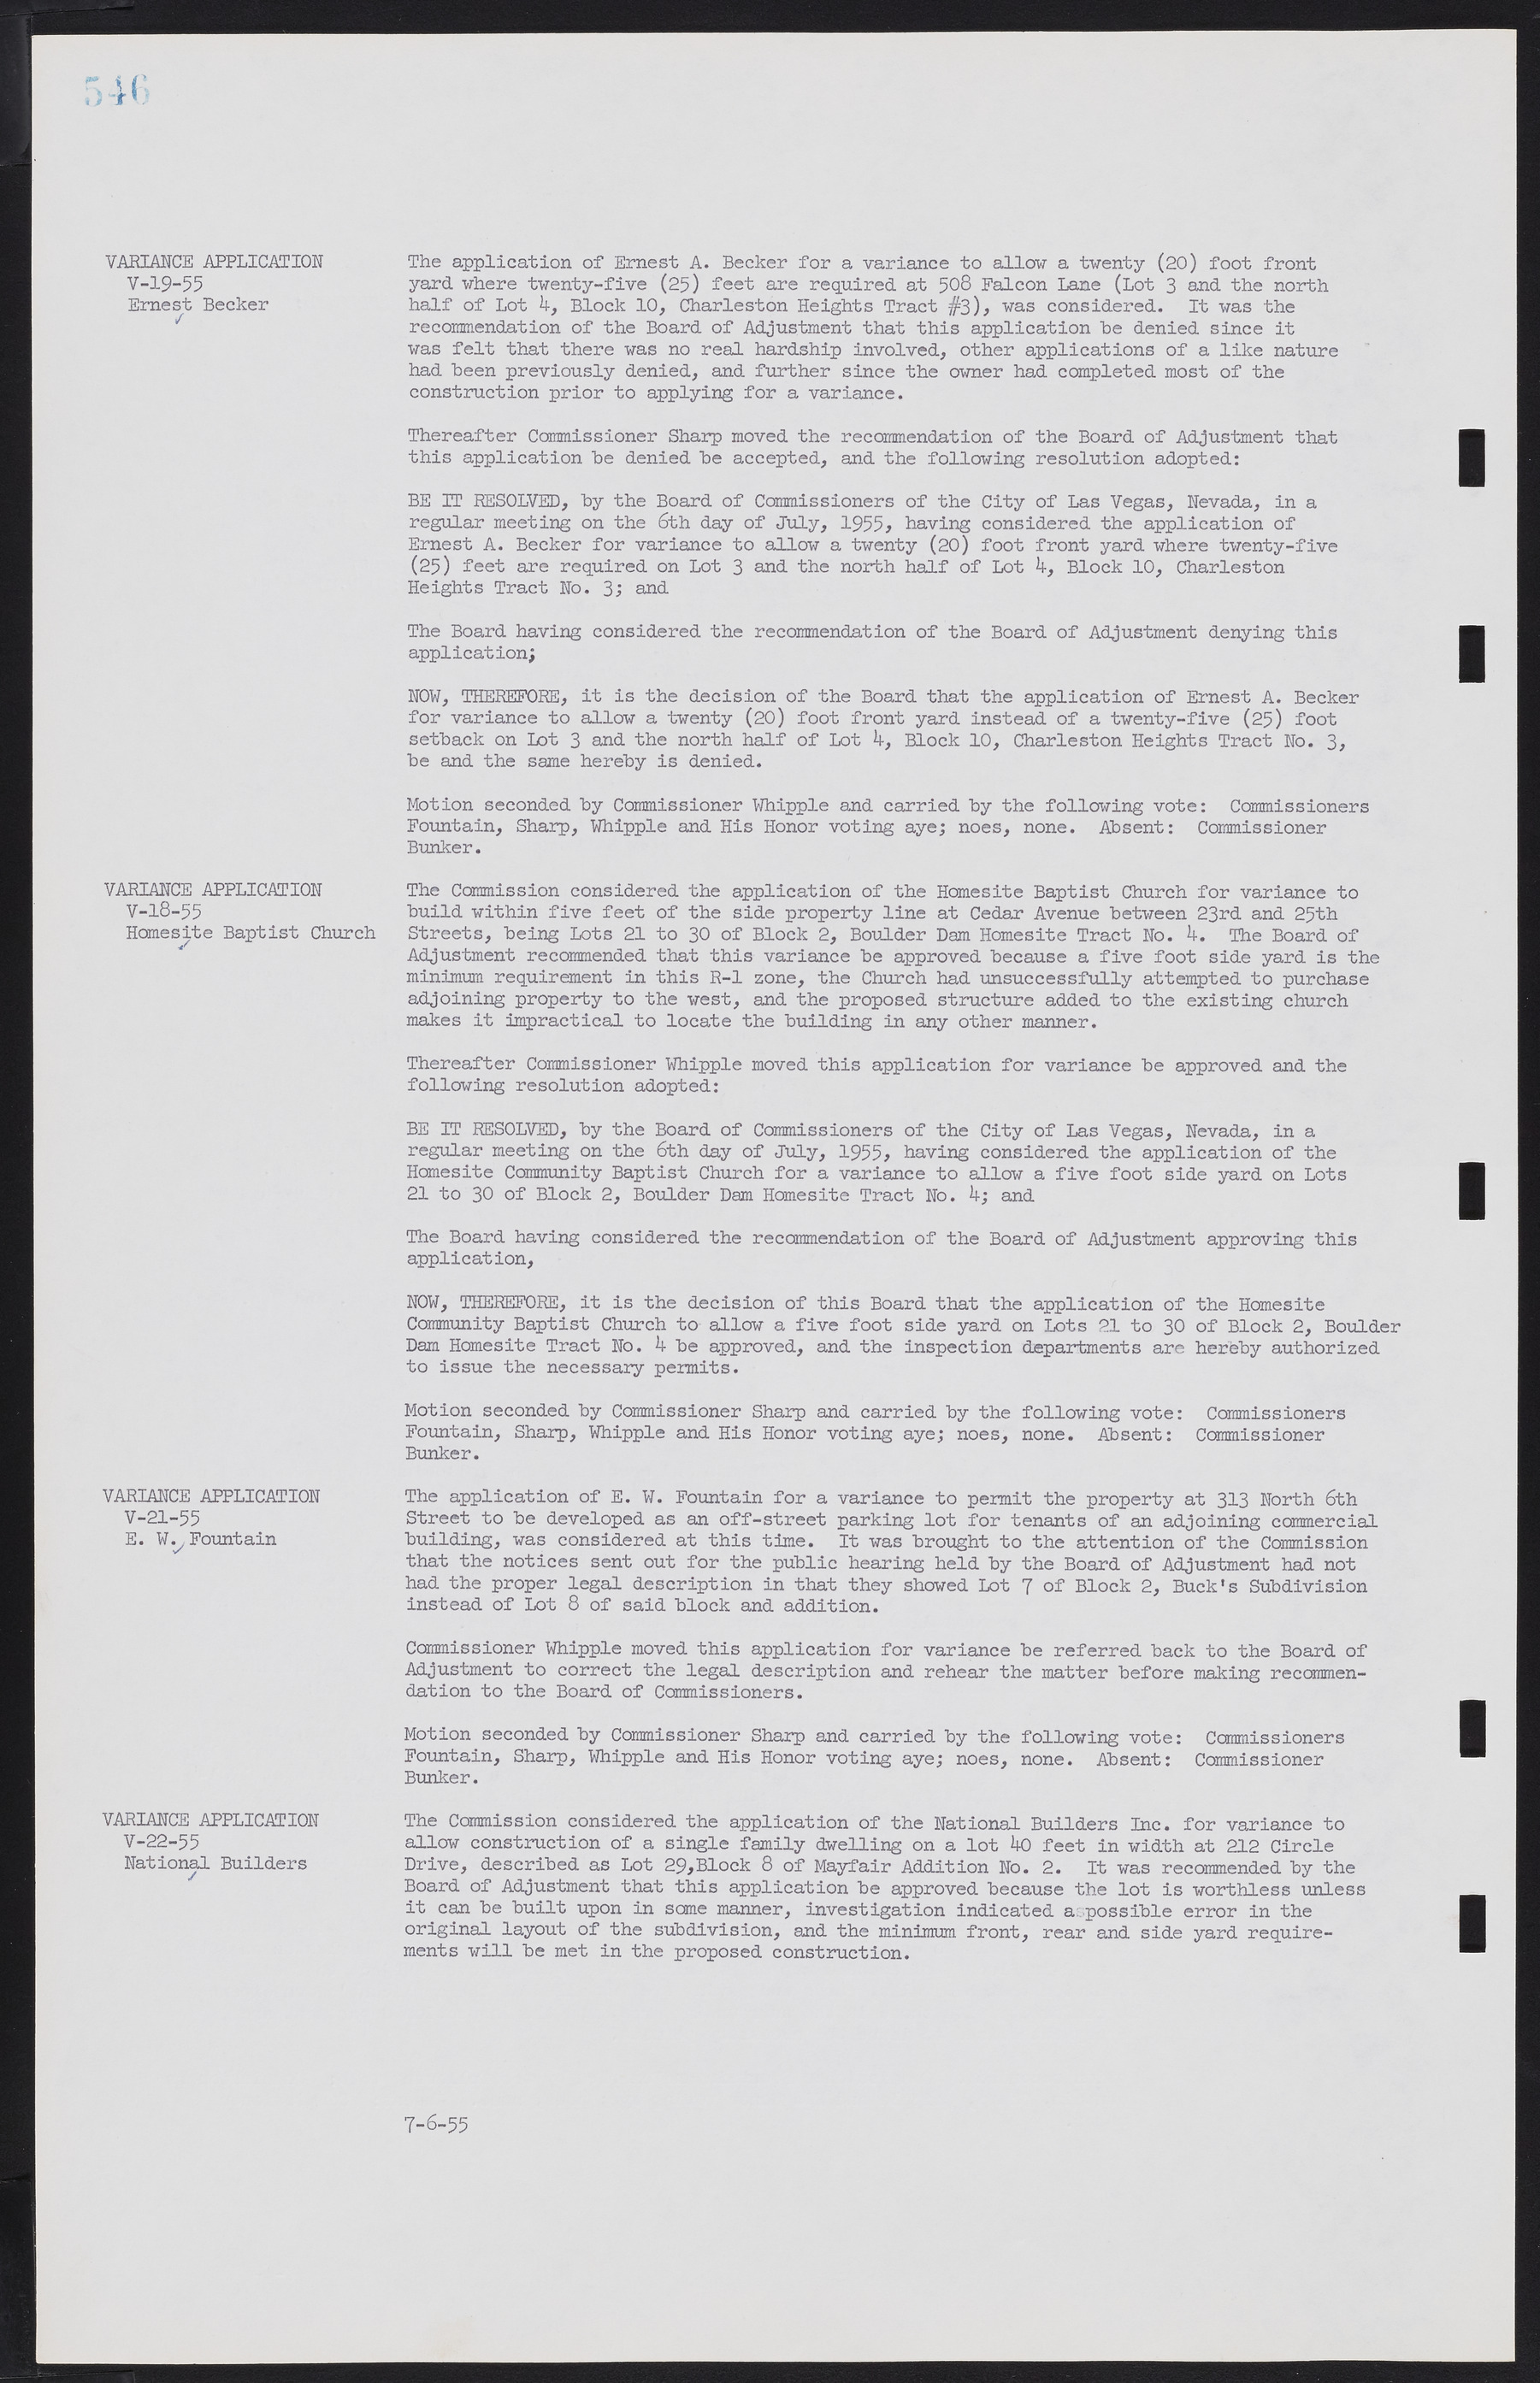 Las Vegas City Commission Minutes, February 17, 1954 to September 21, 1955, lvc000009-552